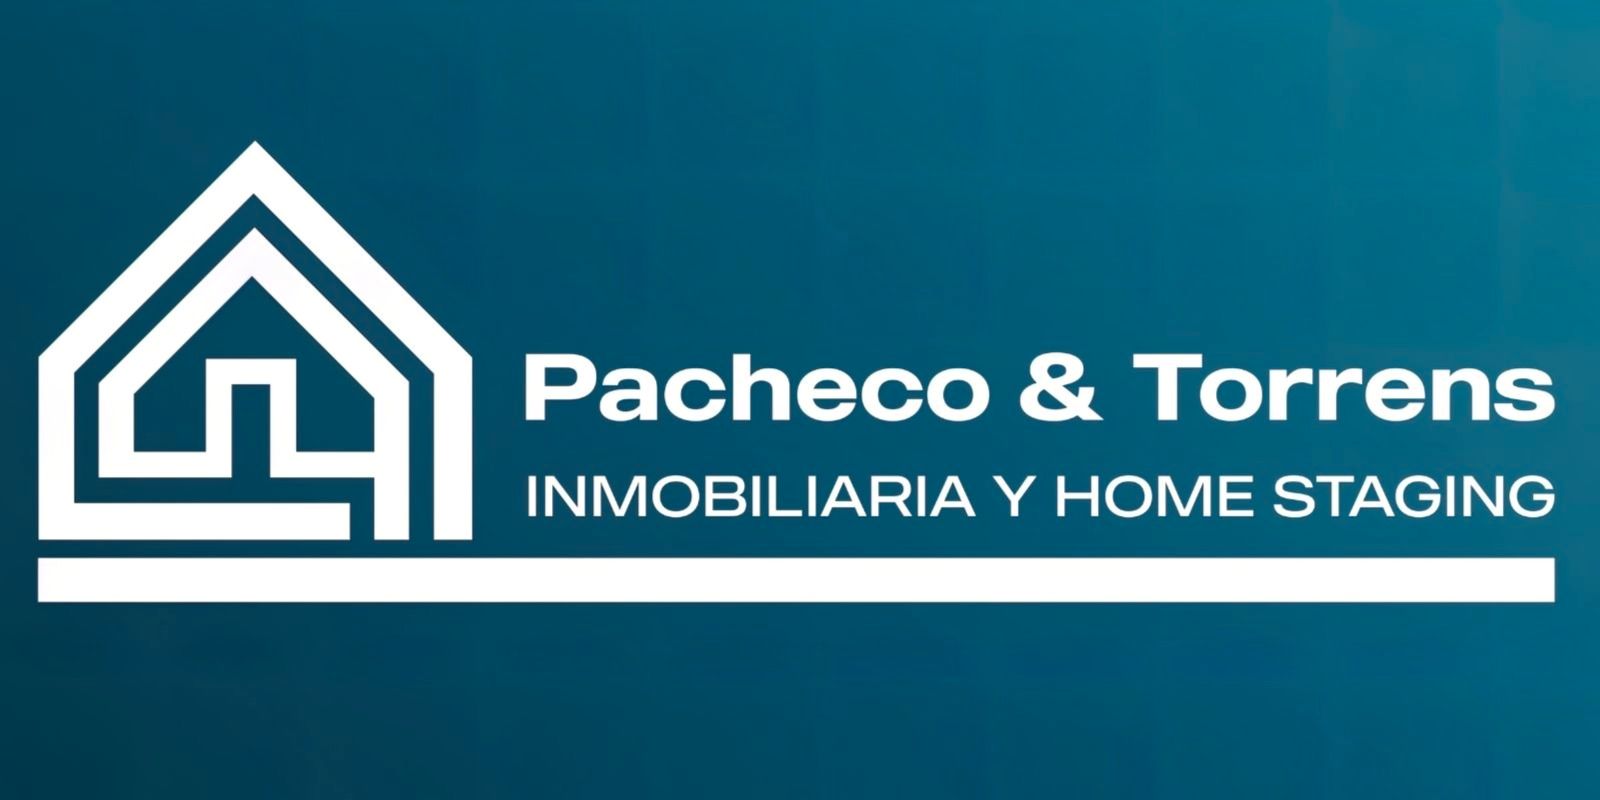 Pacheco & Torrens